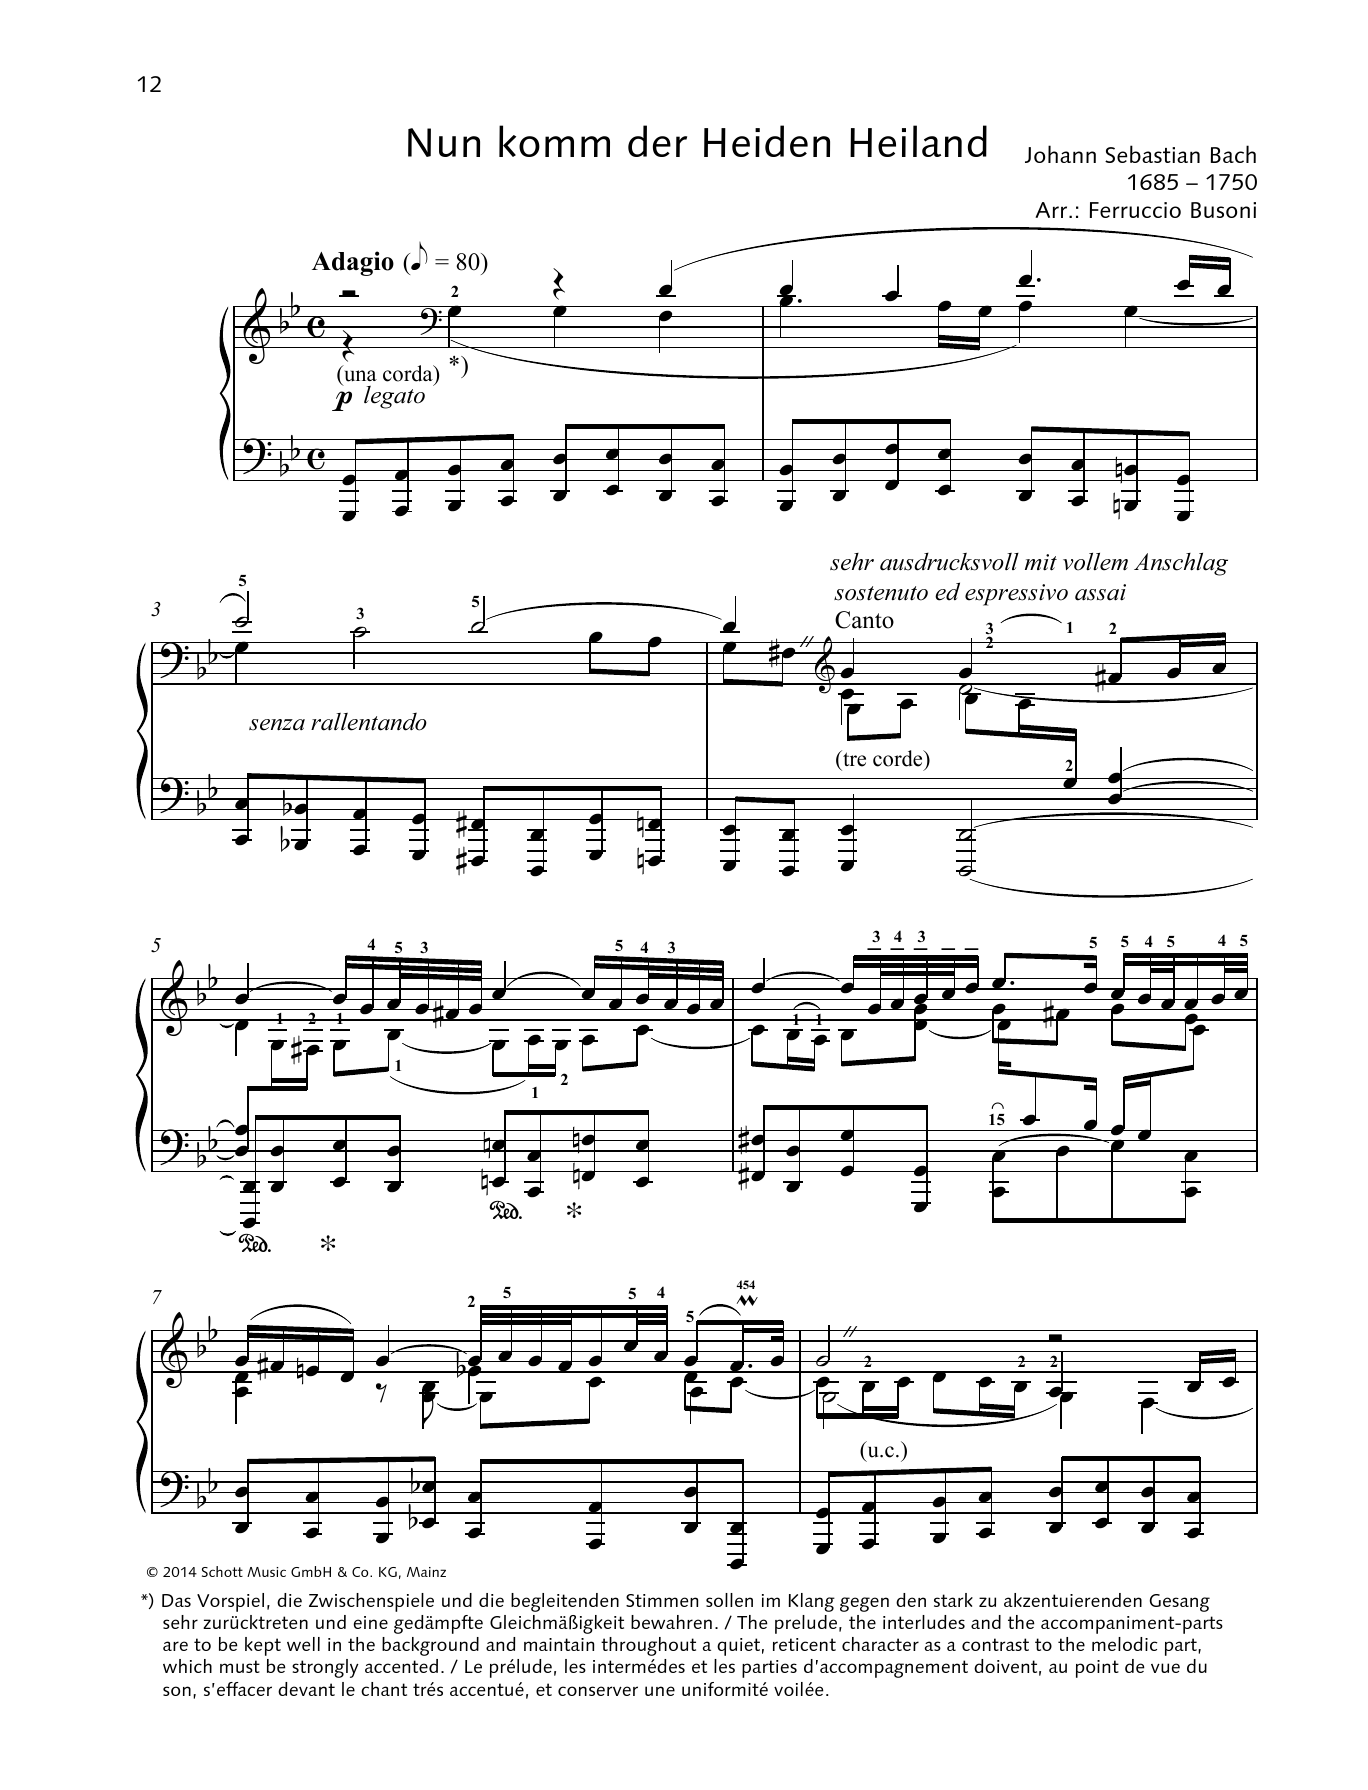 Johann Sebastian Bach Nun komm der Heiden Heiland Sheet Music Notes & Chords for Piano Solo - Download or Print PDF